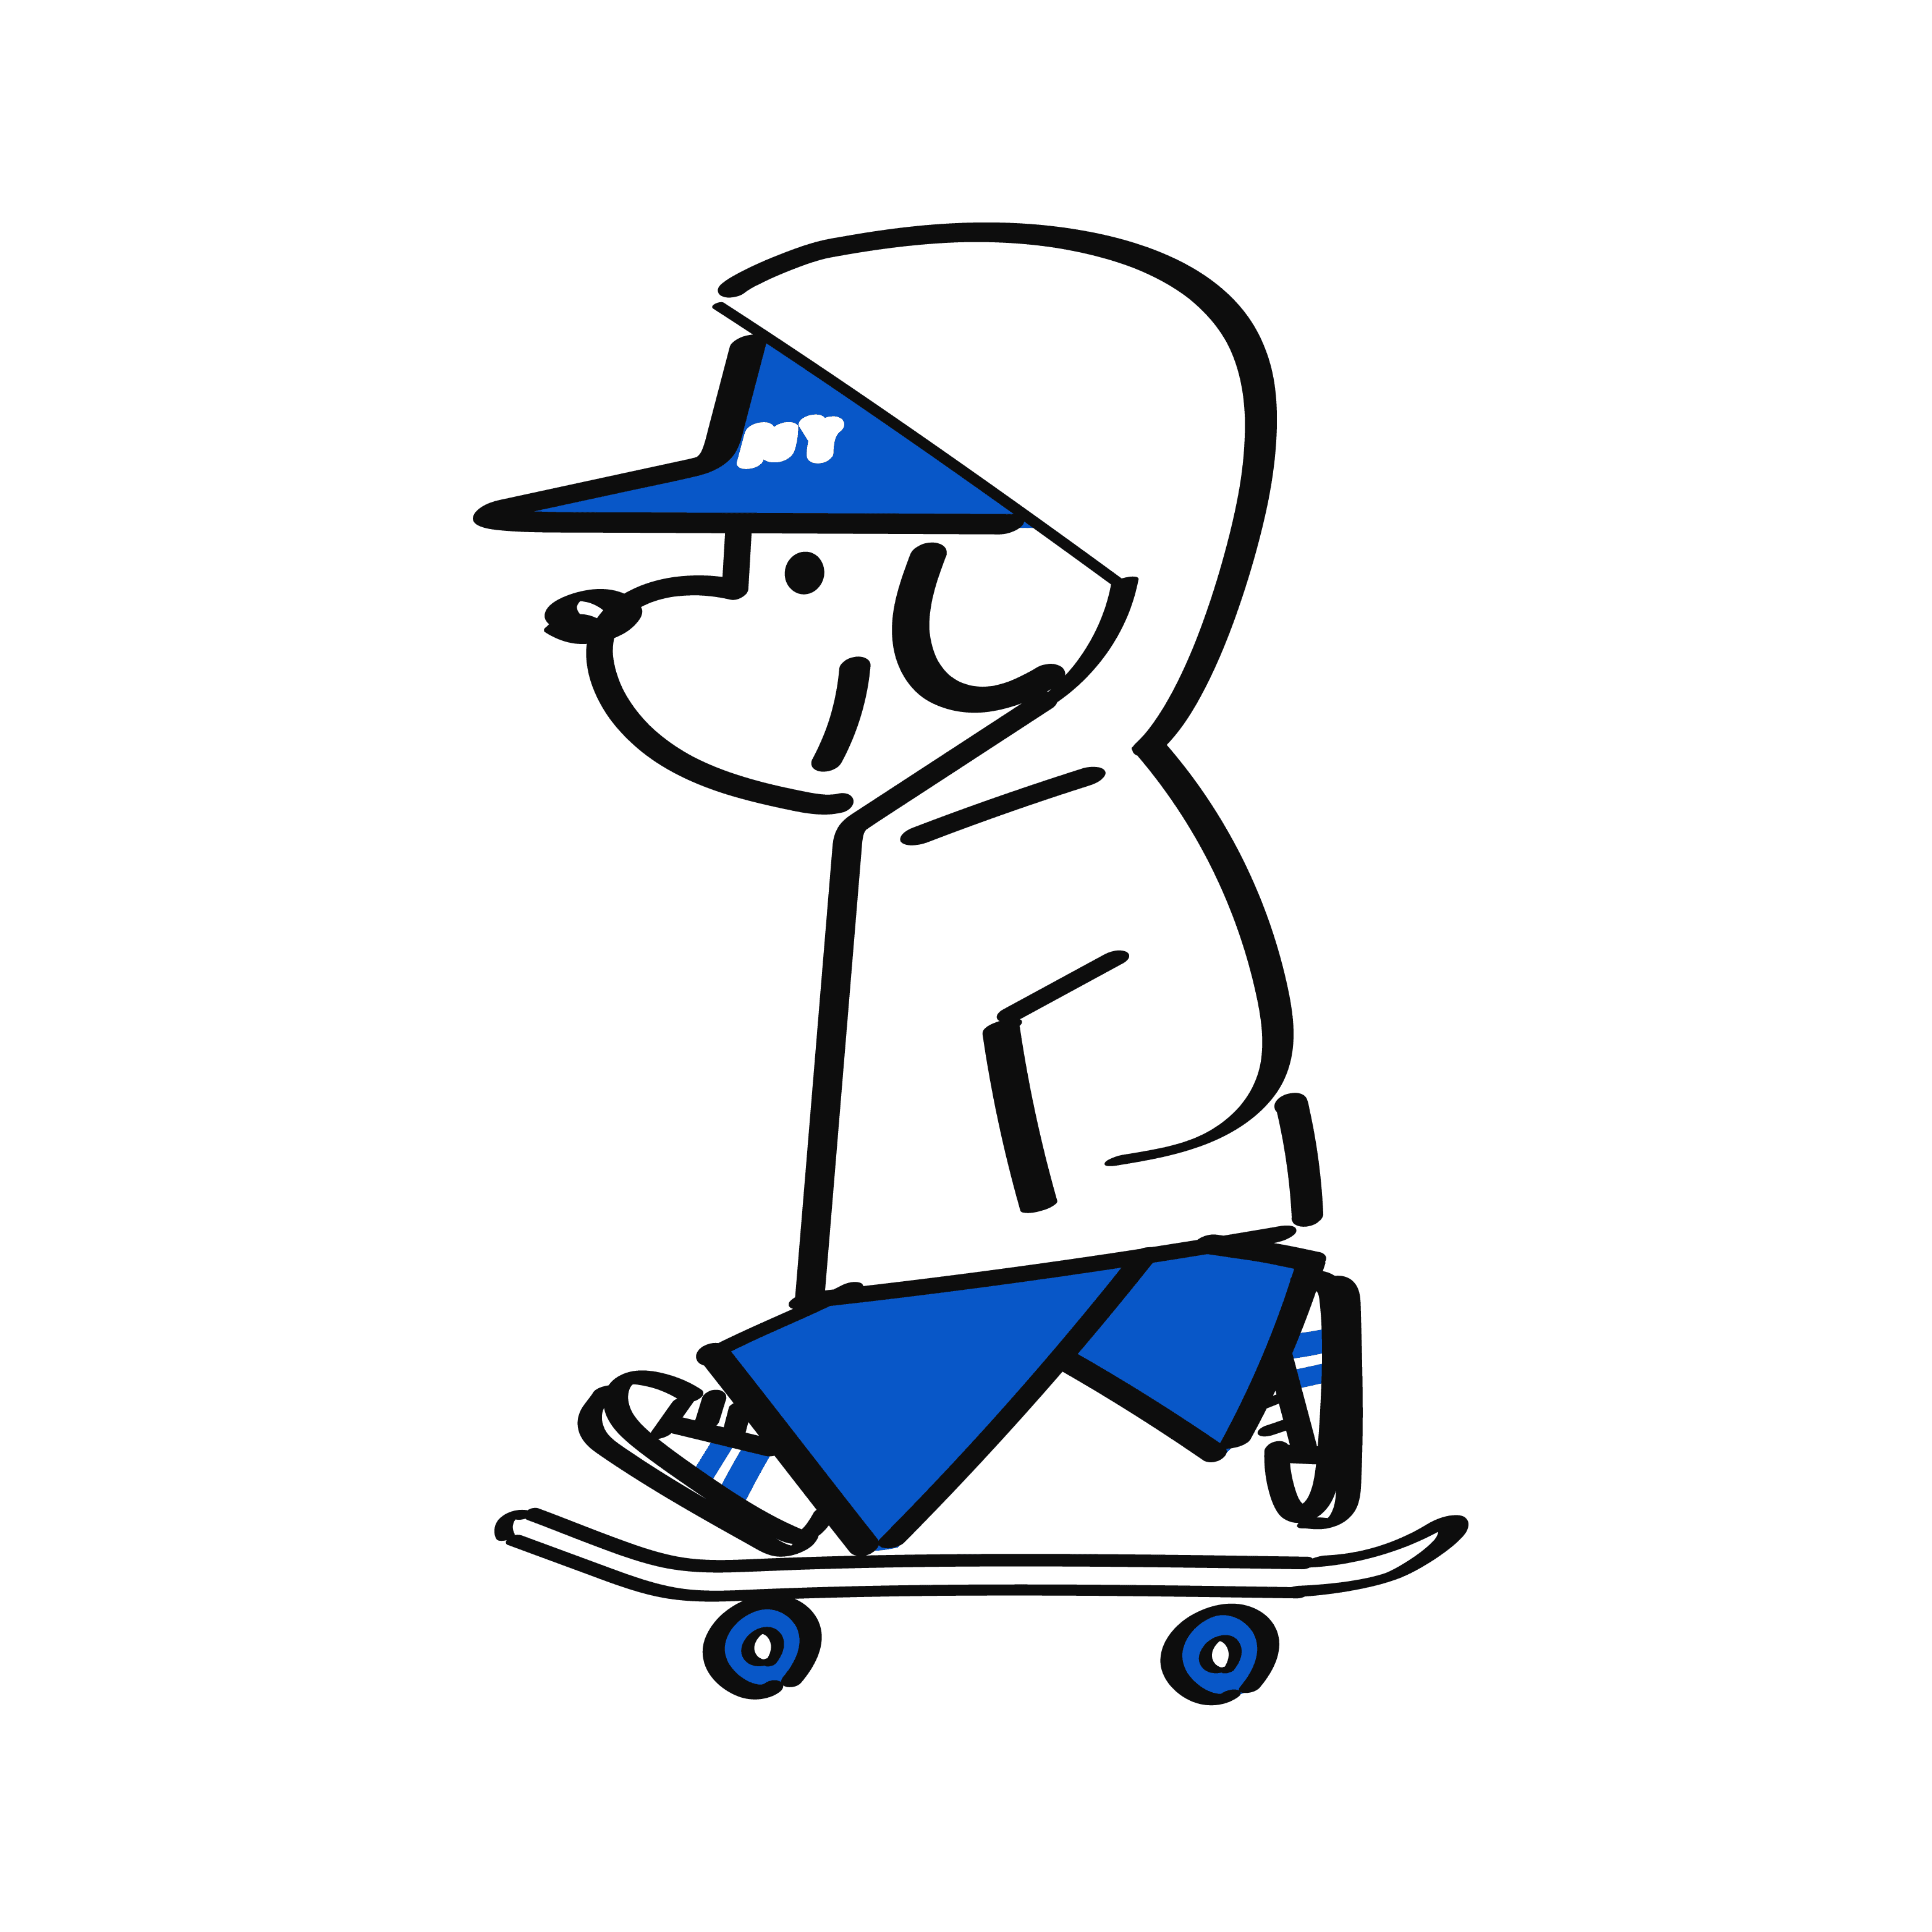 Skater john スケータージョン キャンバスアート - yanbunh.com